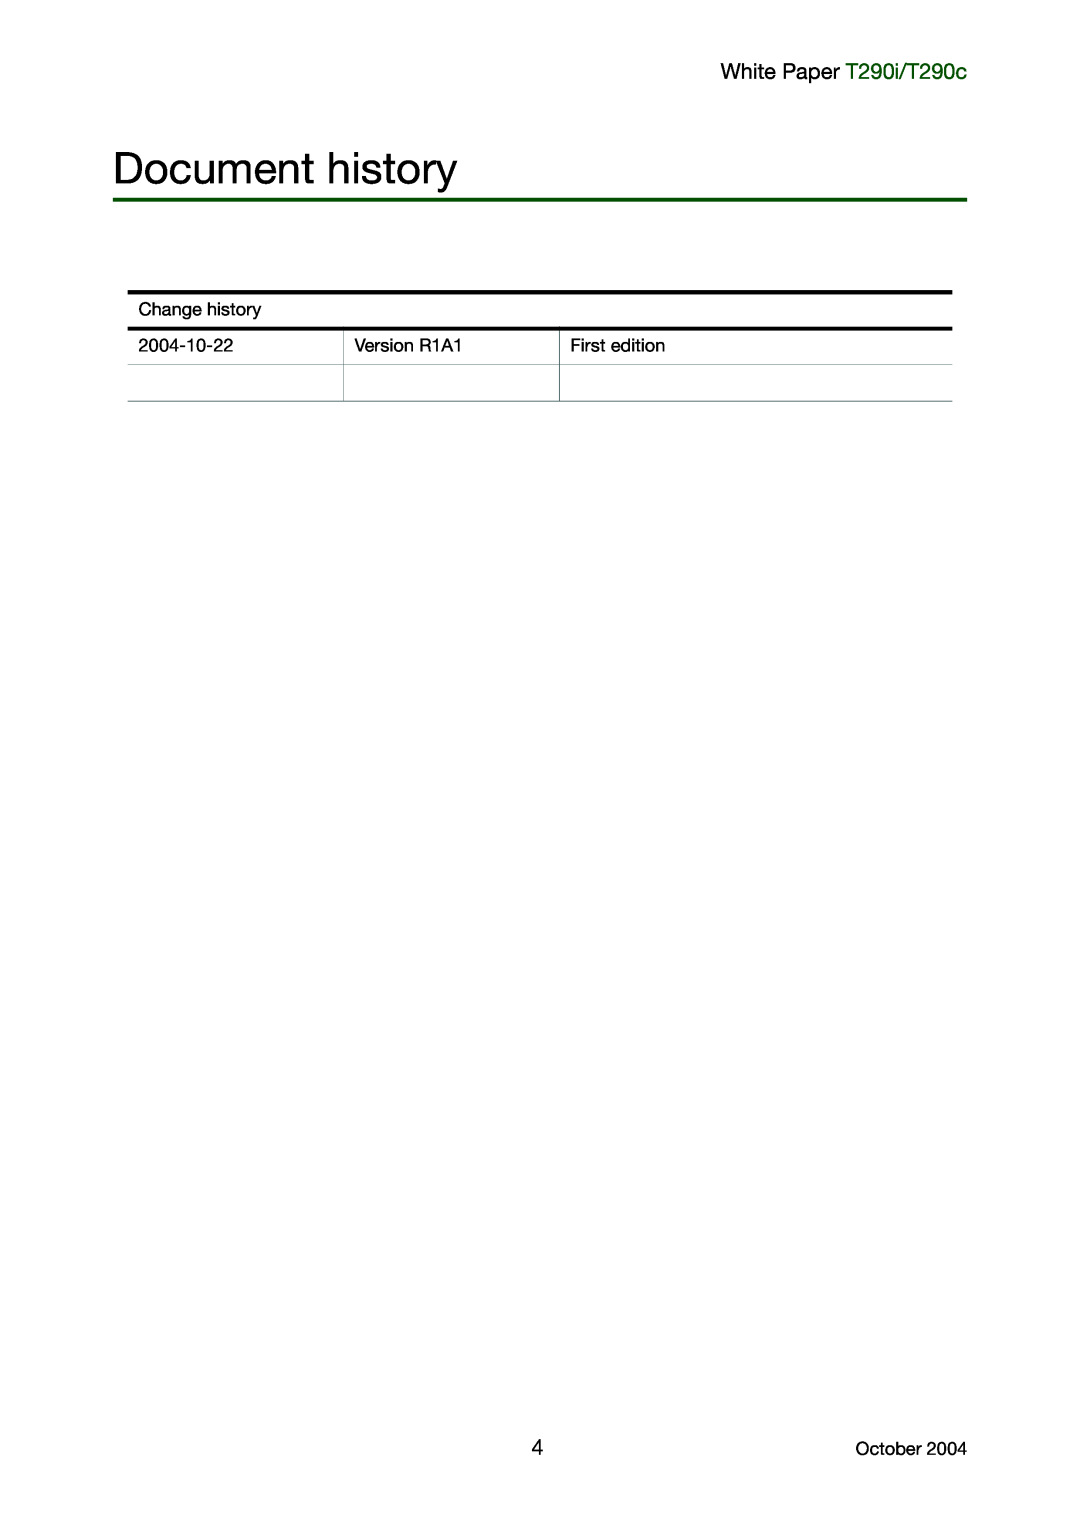 Sony Ericsson manual Document history, White Paper T290i/T290c 